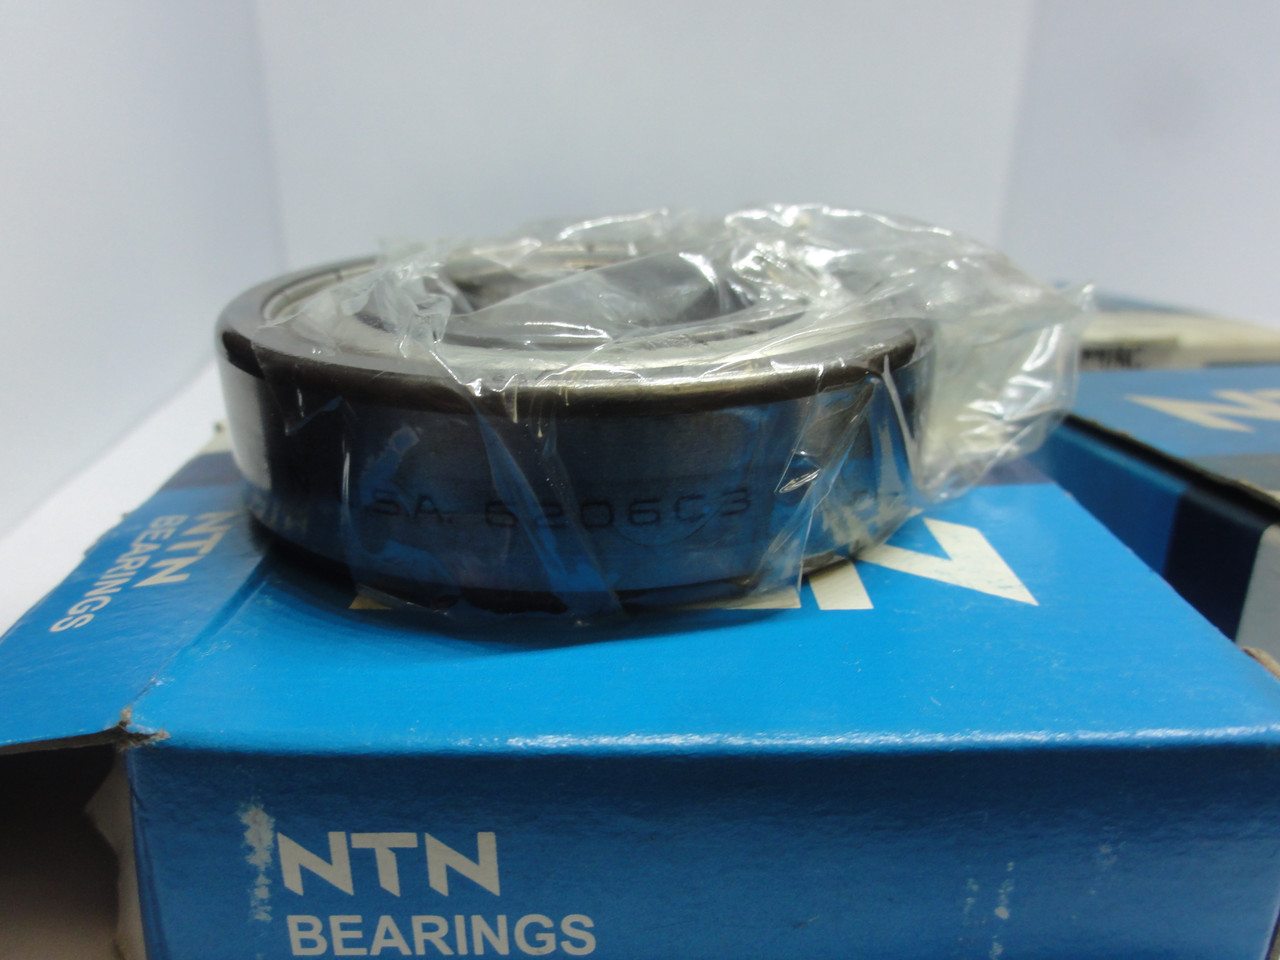 NTN 6206ZZC3/C5 Bearings (Lot of 6) New (Open Box)